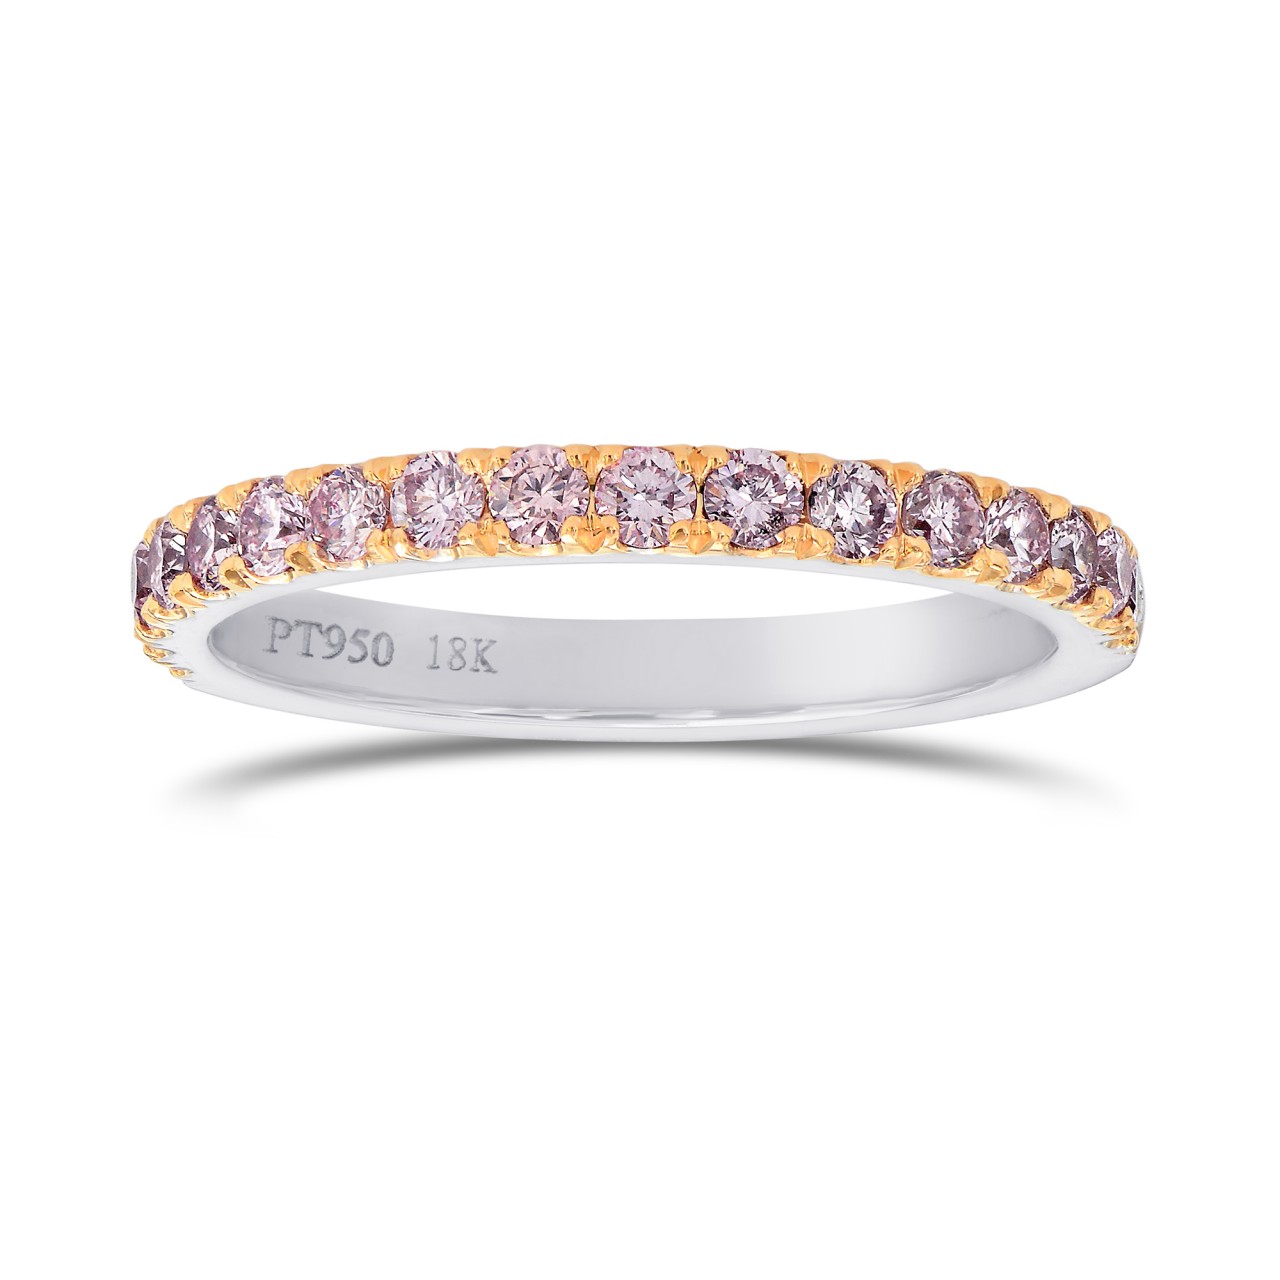 Fancy Light Pink Diamond Half Eternity Ring, SKU 25957R (0.35Ct TW)